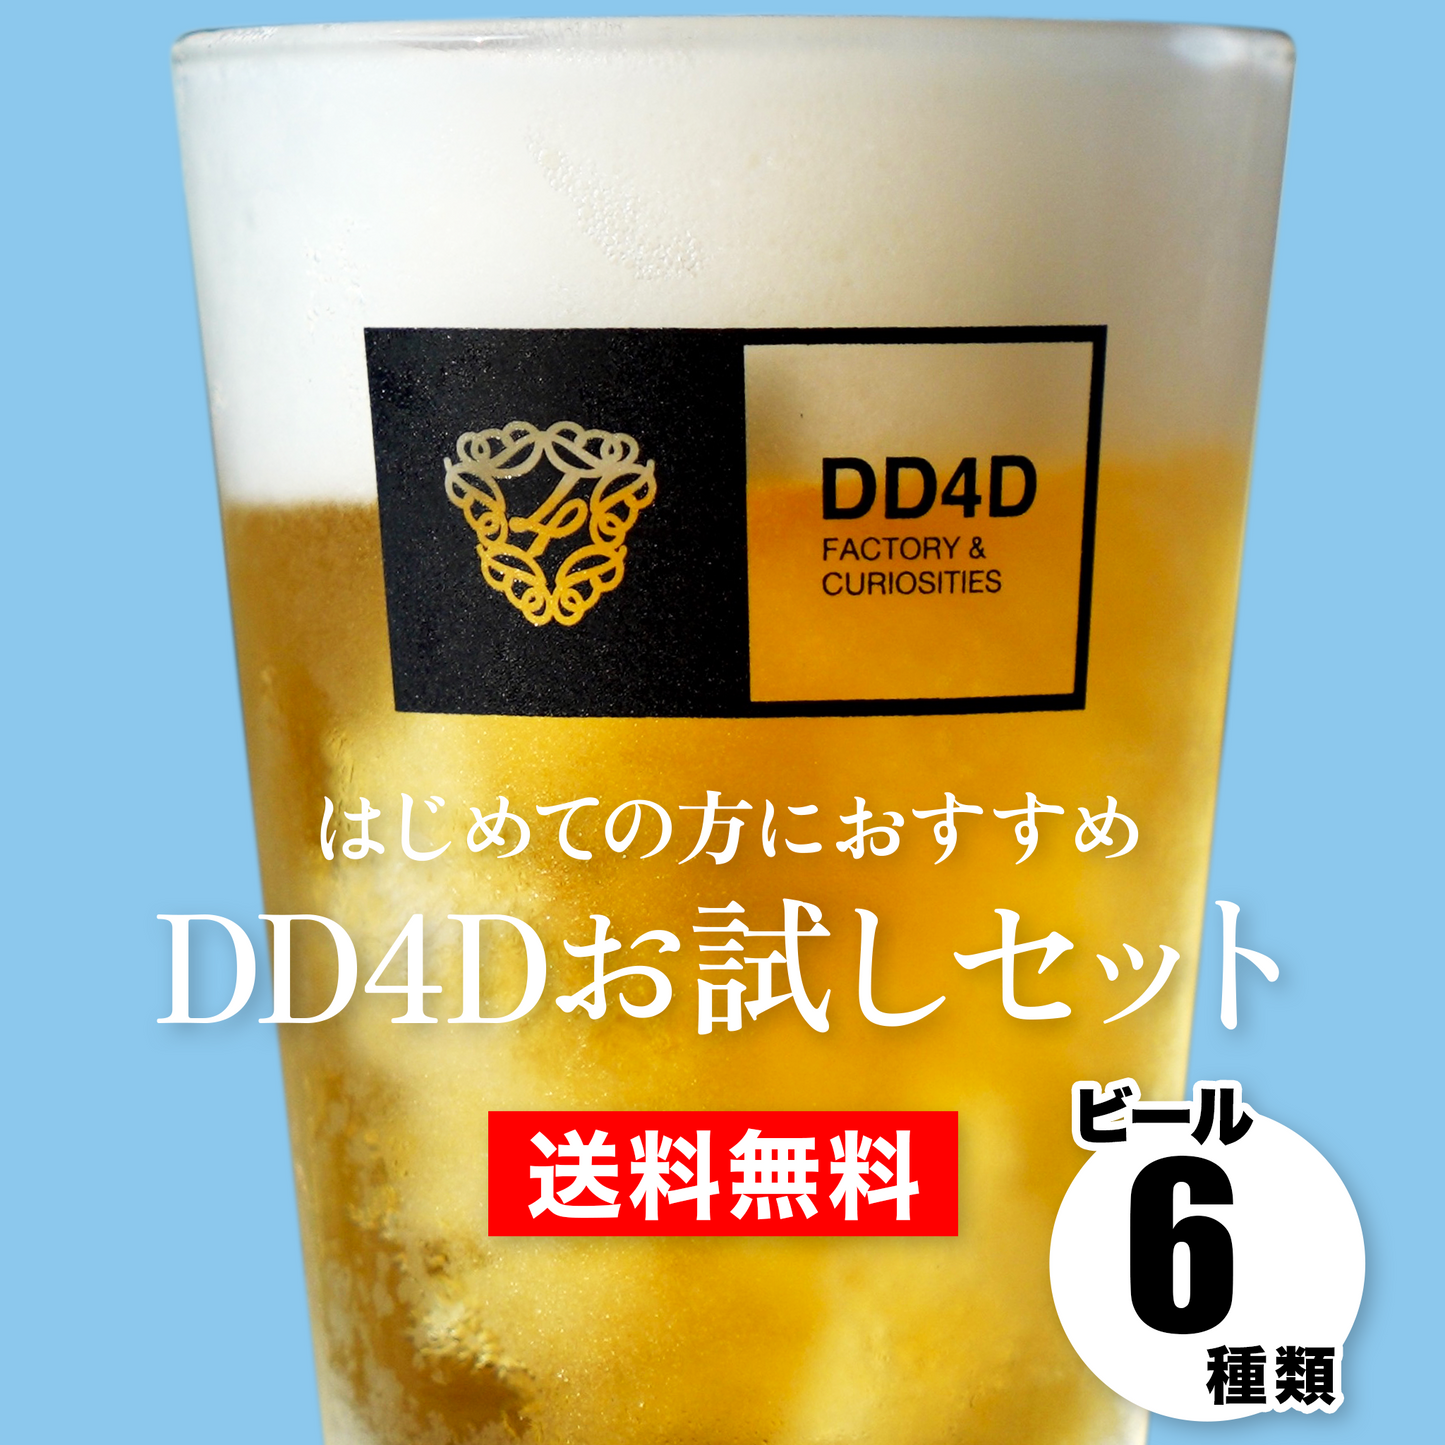 DD4Dお試しセット6本入り (送料無料) 4月29日リニューアル